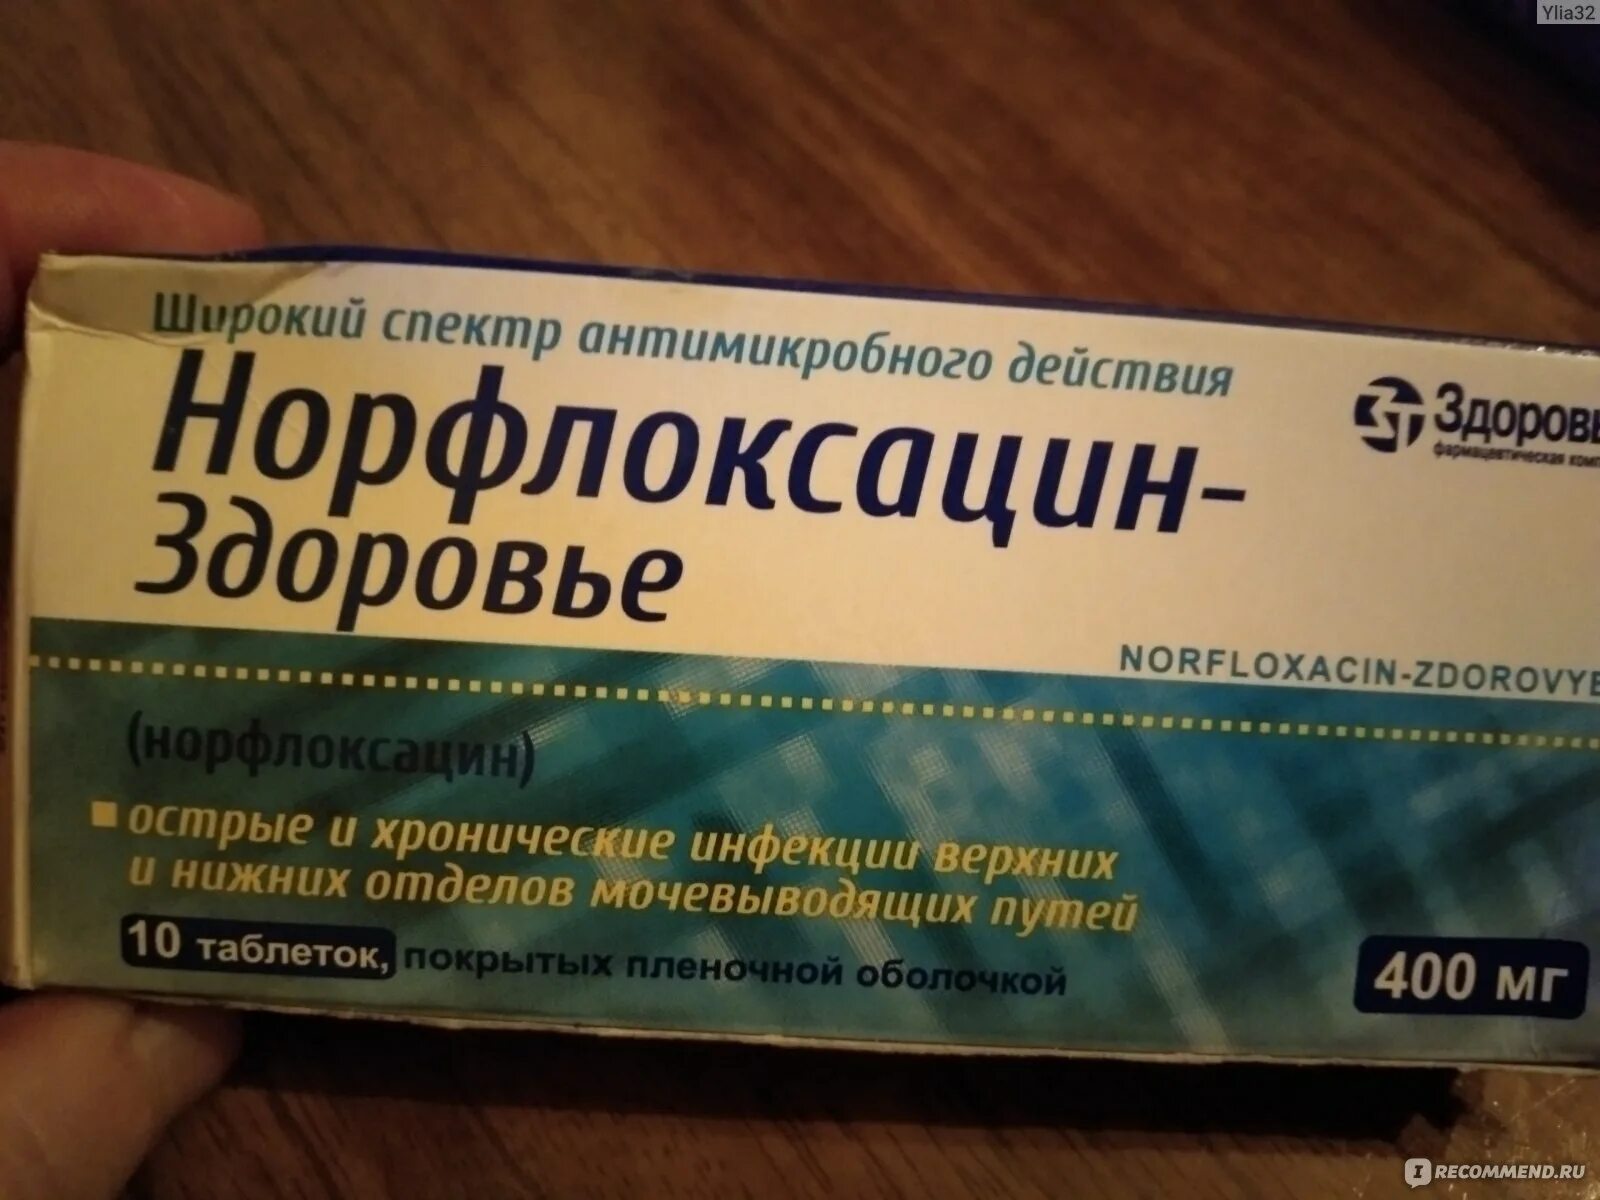 Норфлоксацин это антибиотик. Норфлоксацин 200мг. Норфлоксацин в капсулах. Энтпофлоусоцин таблетки. Норфлоксацин таблетки производители.